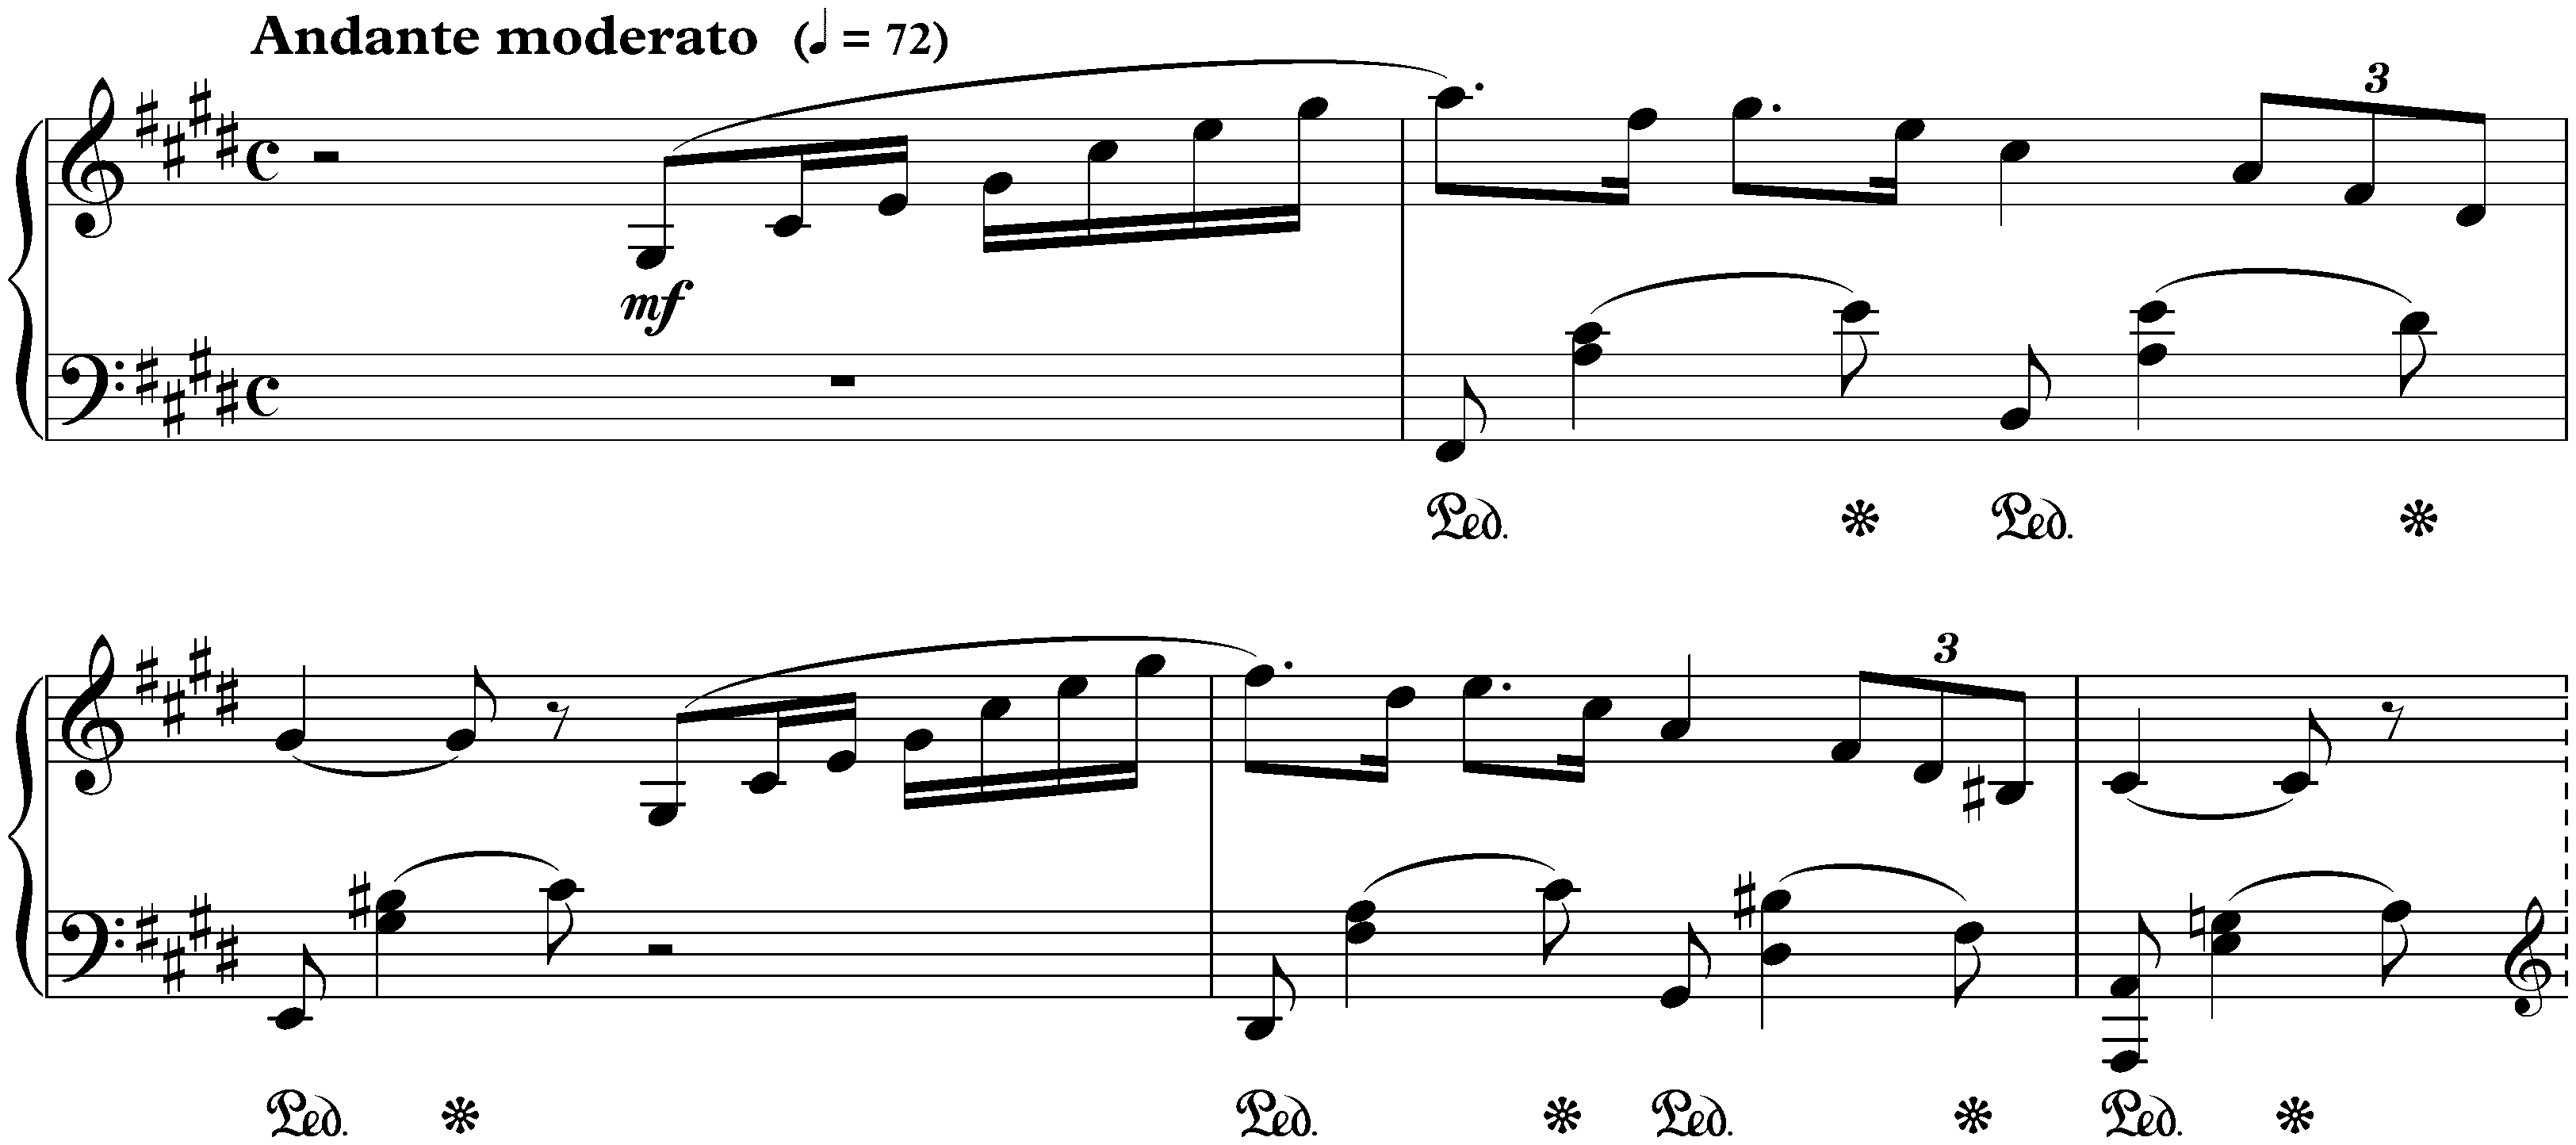 Pièces brèves, op. 84; 5. Improvisation in C-sharp minor